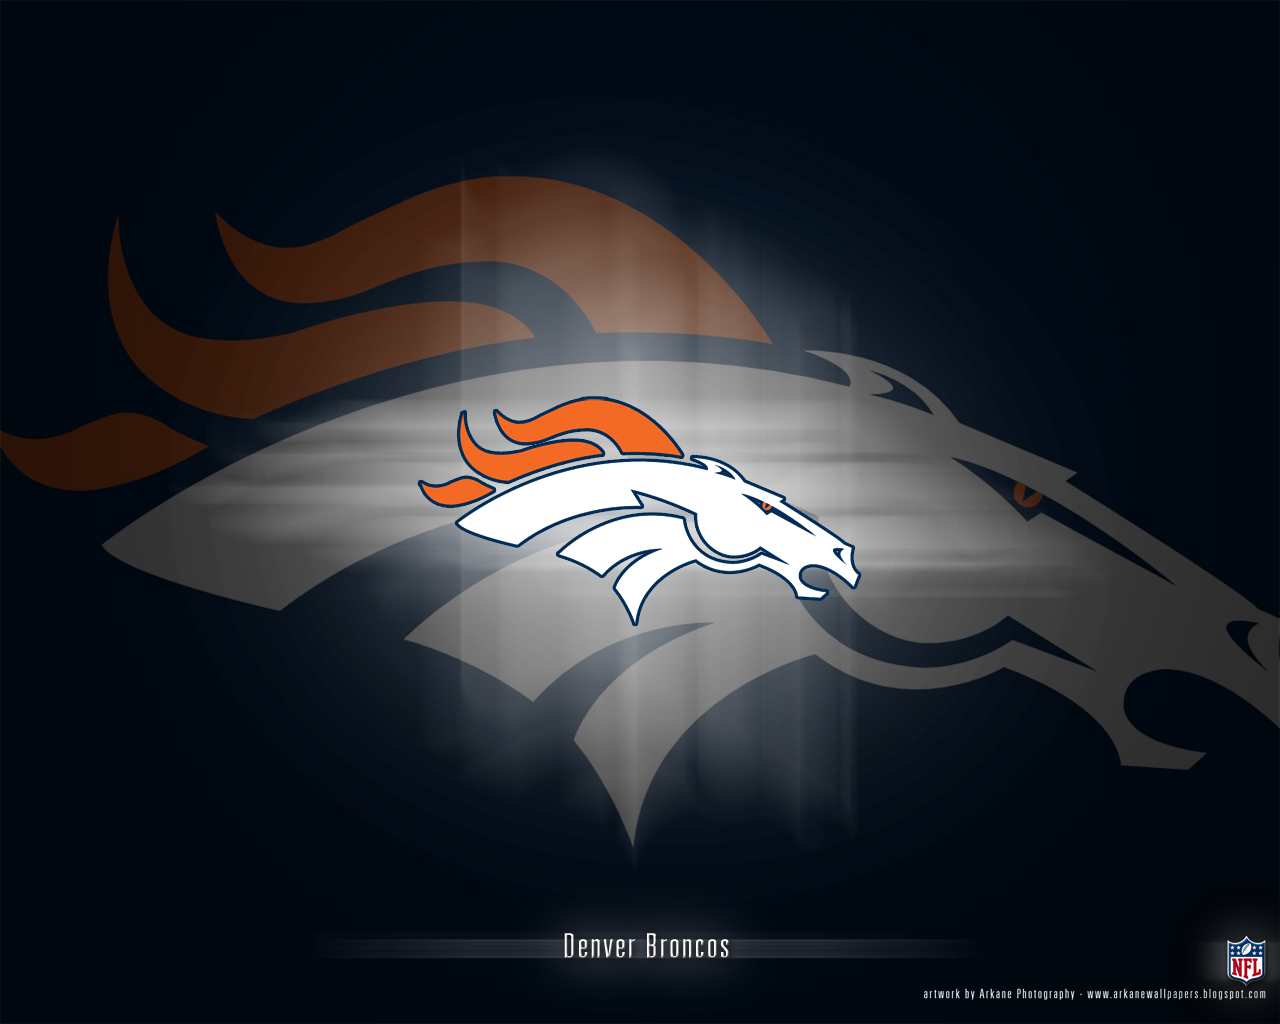 Denver Broncos Helmet Wallpaper Image Amp Pictures Becuo